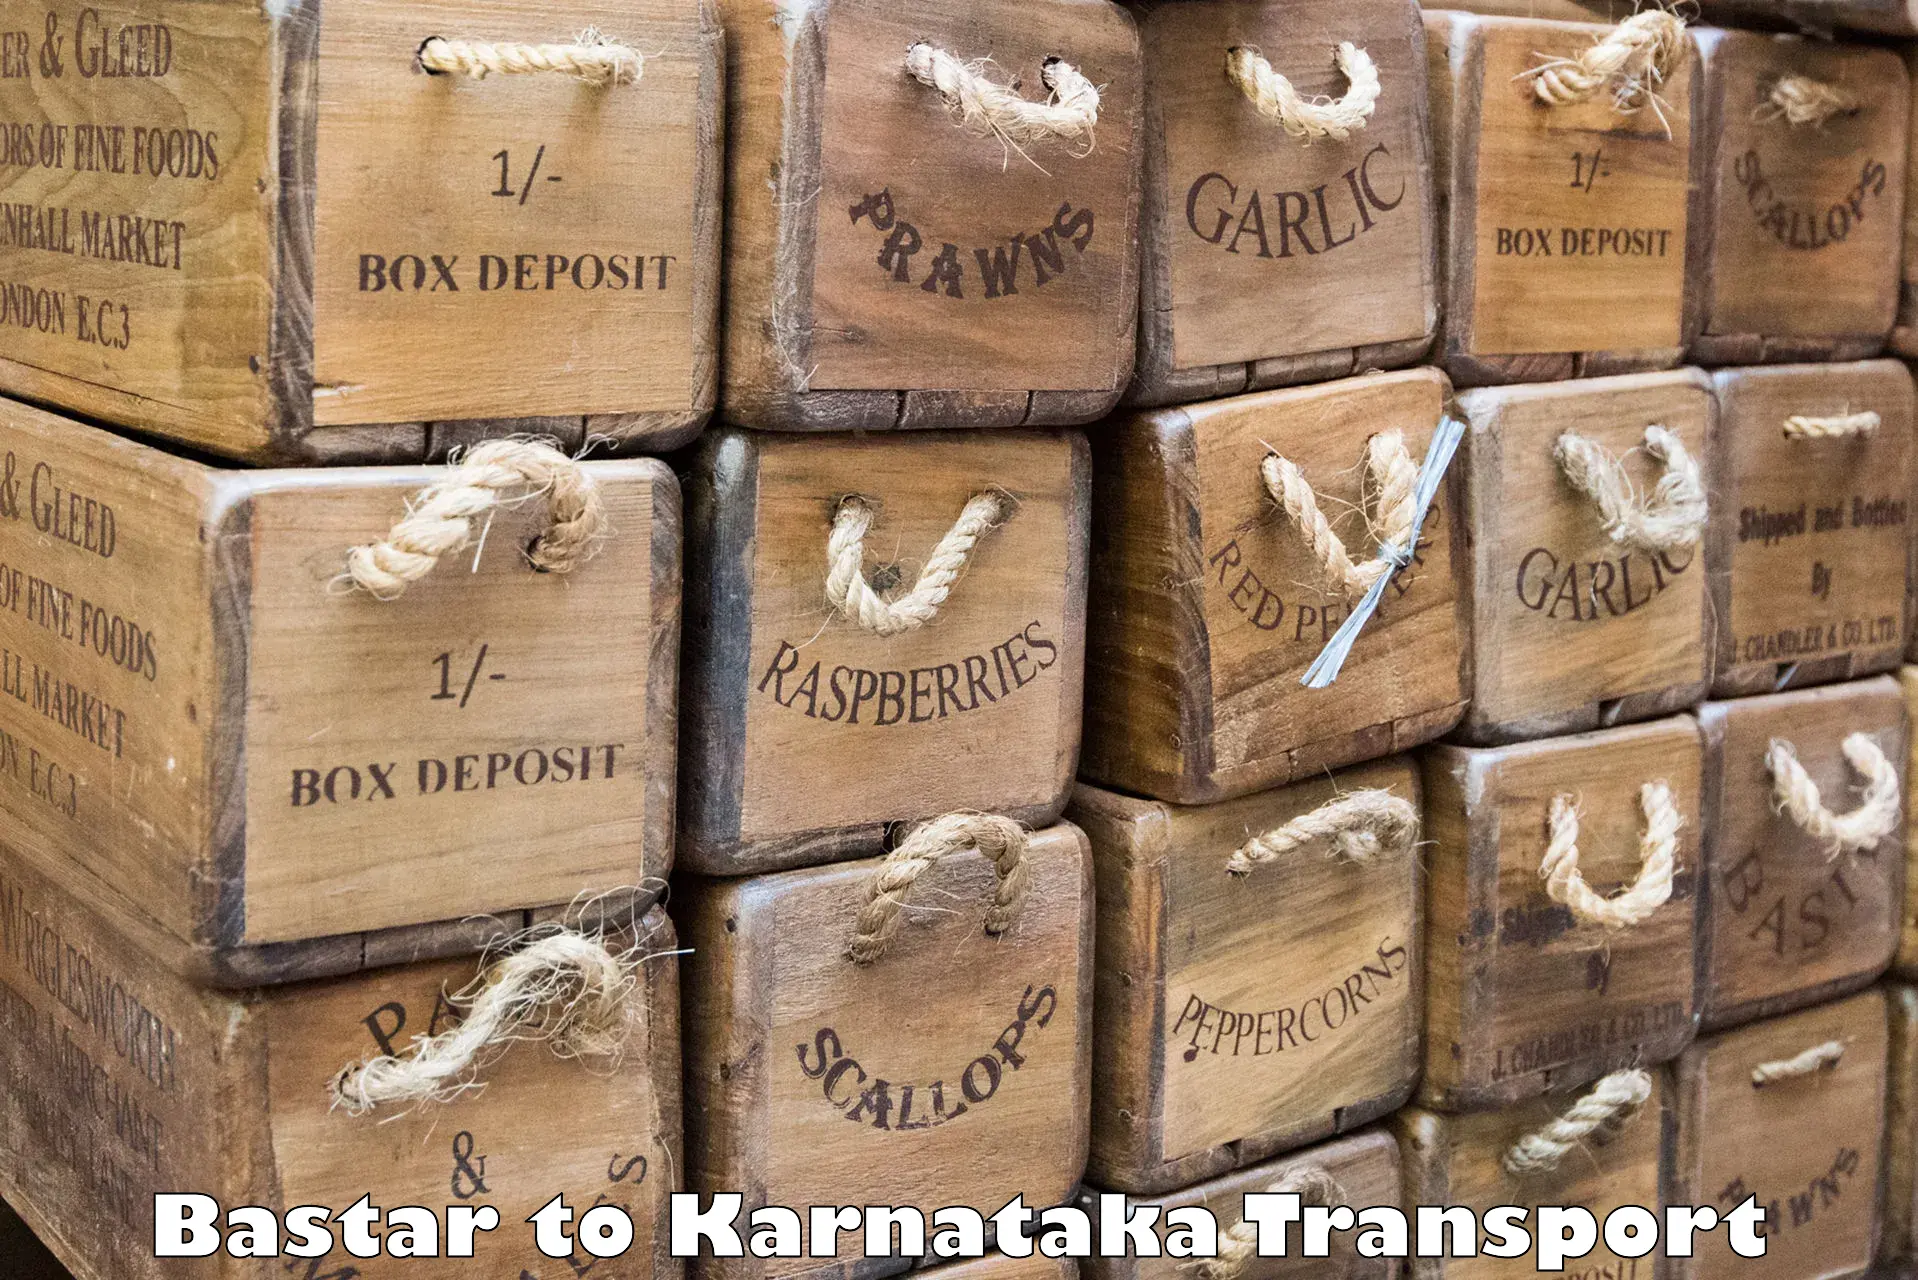 Goods delivery service Bastar to Bangarapet